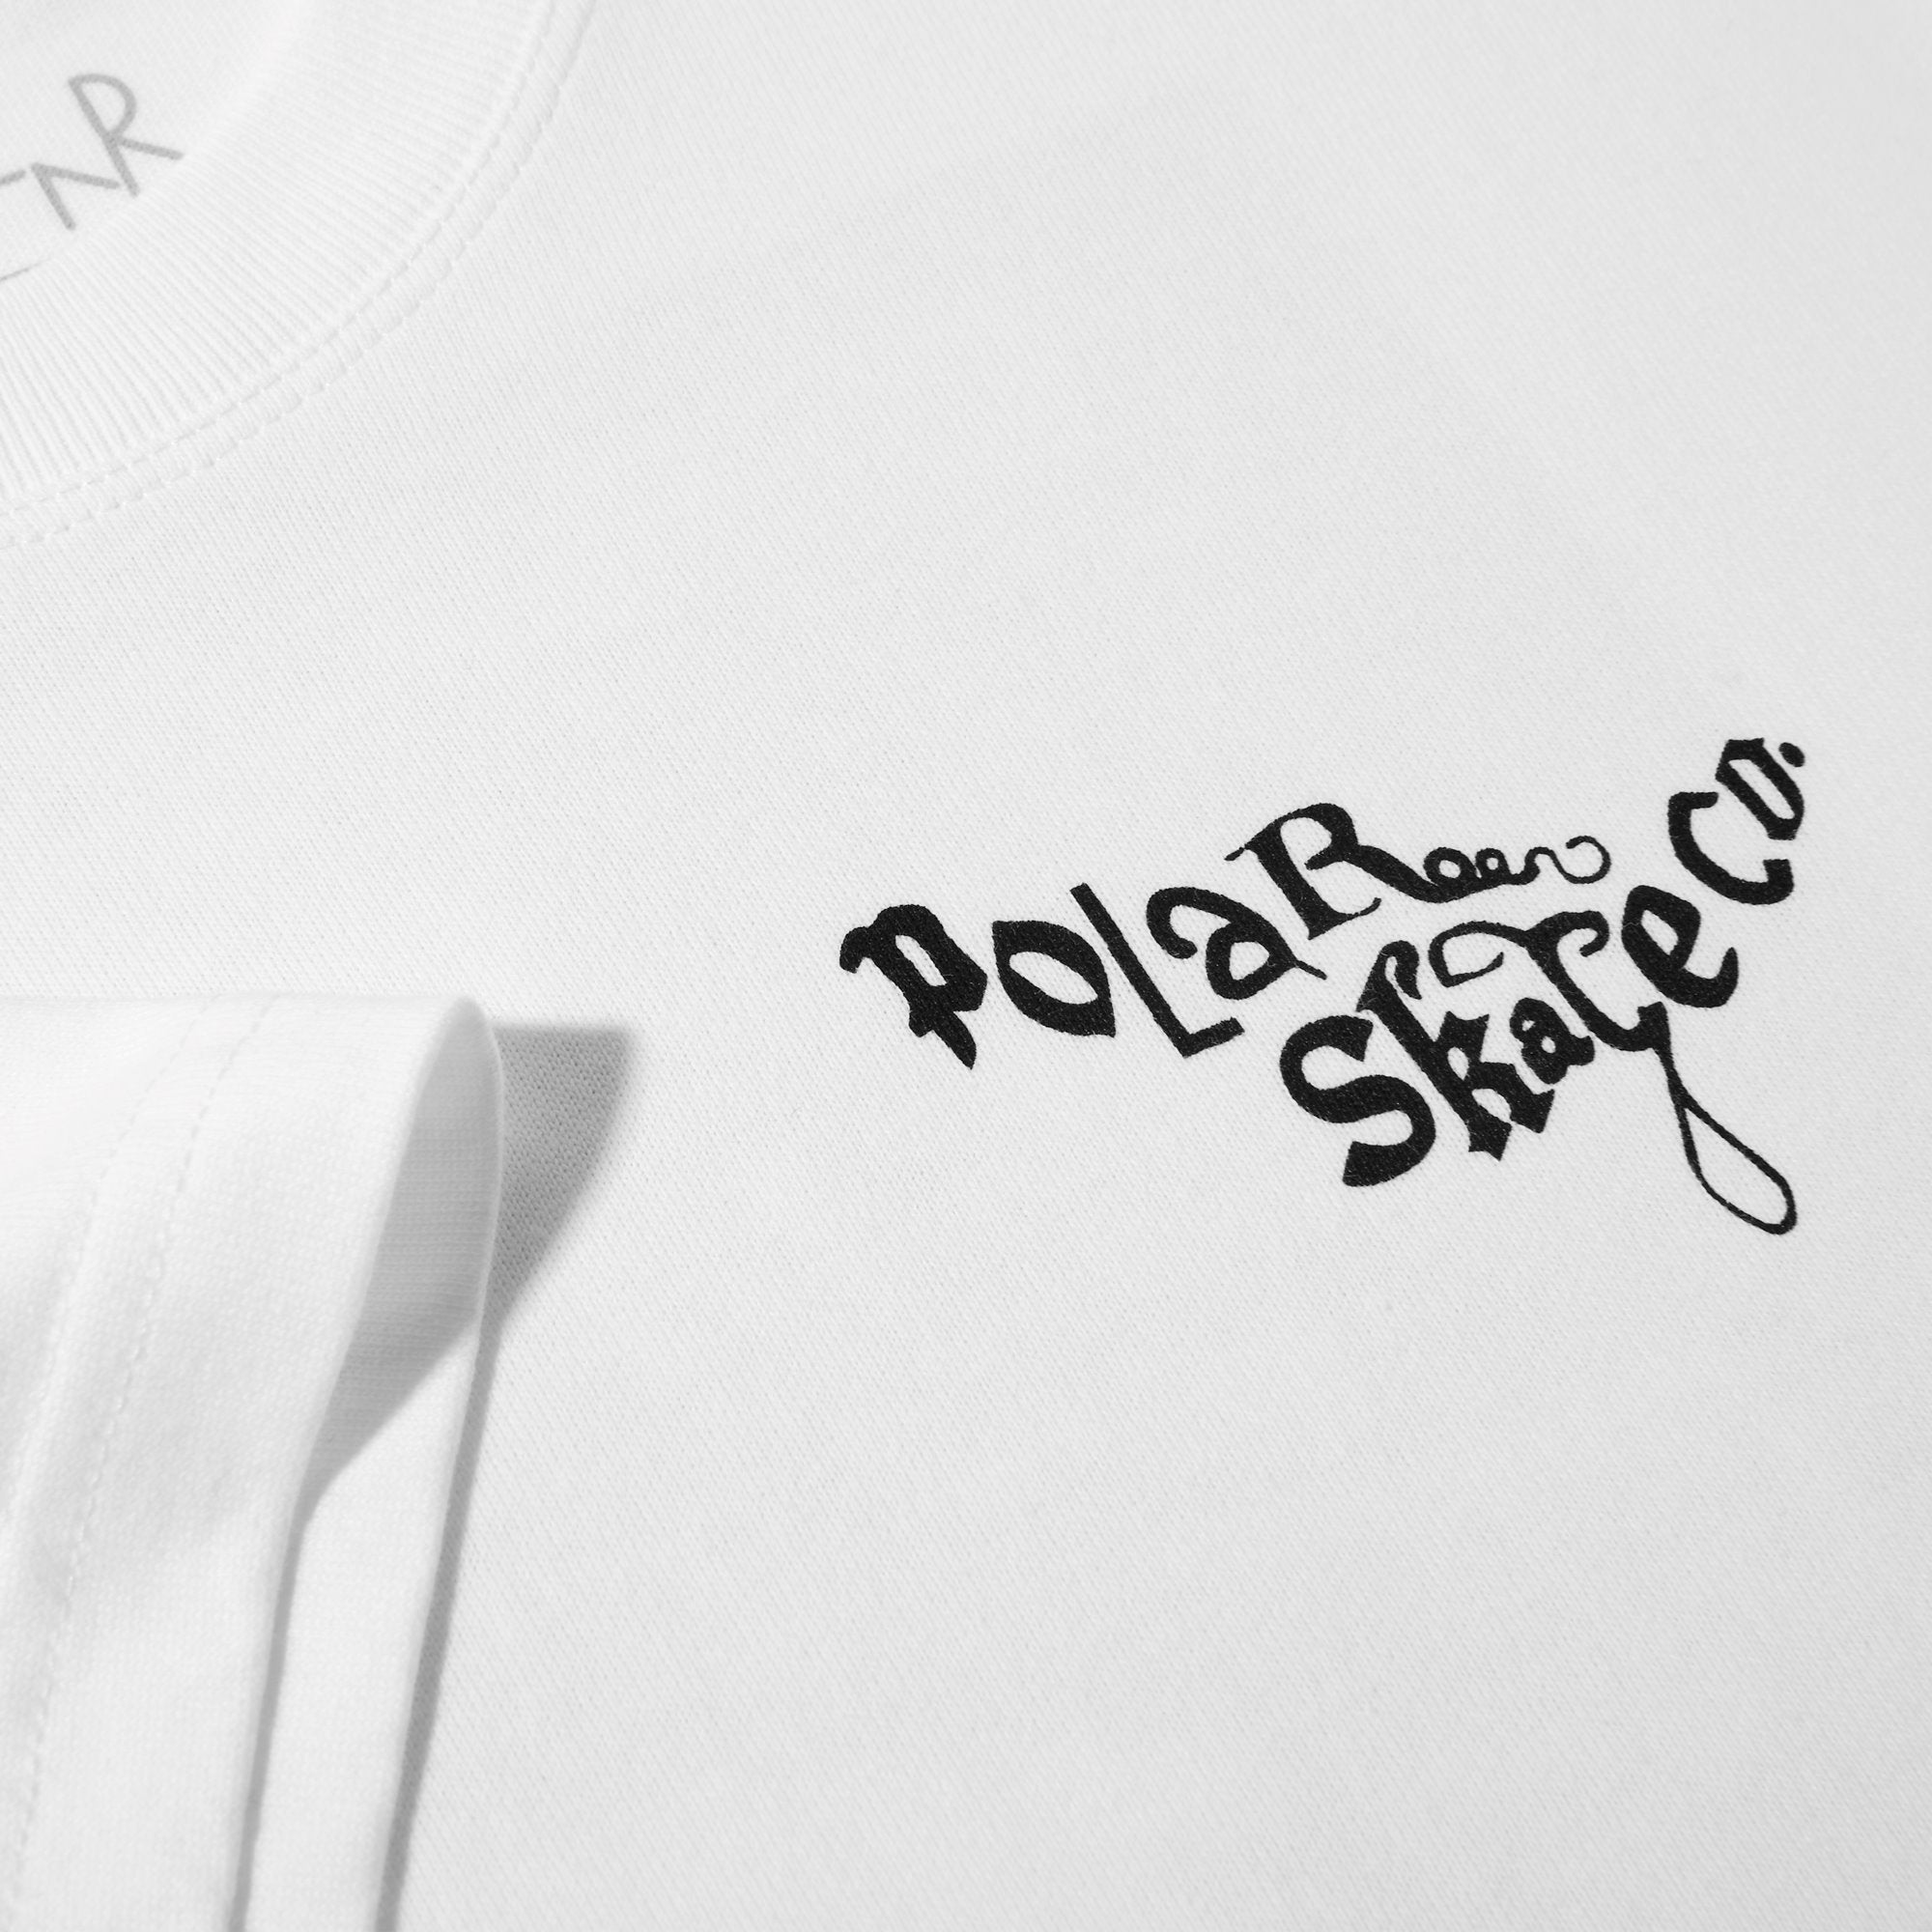 Polar Skate Co. Gorilla King T-Shirt - White Polar Skate Co. 